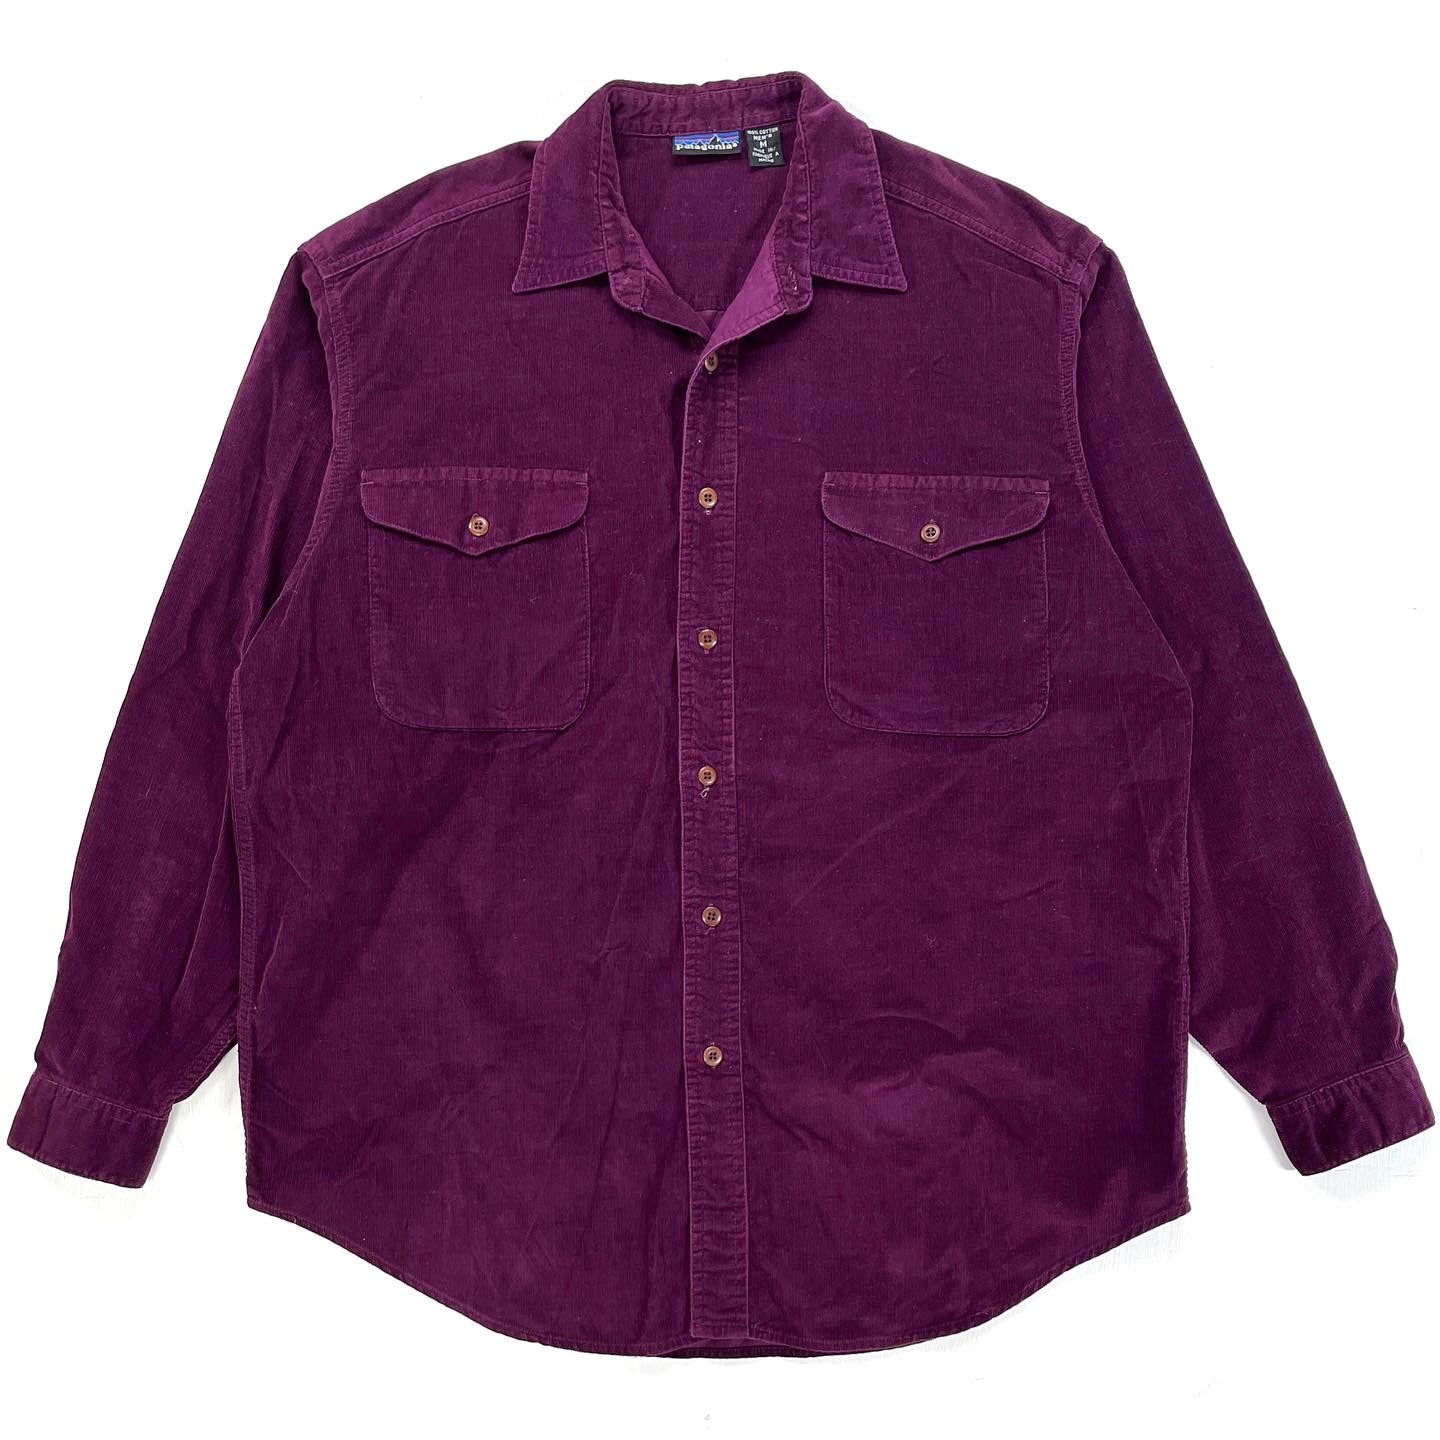 1991 Patagonia Lightweight Cotton Corduroy Shirt, Deep Plum (L)